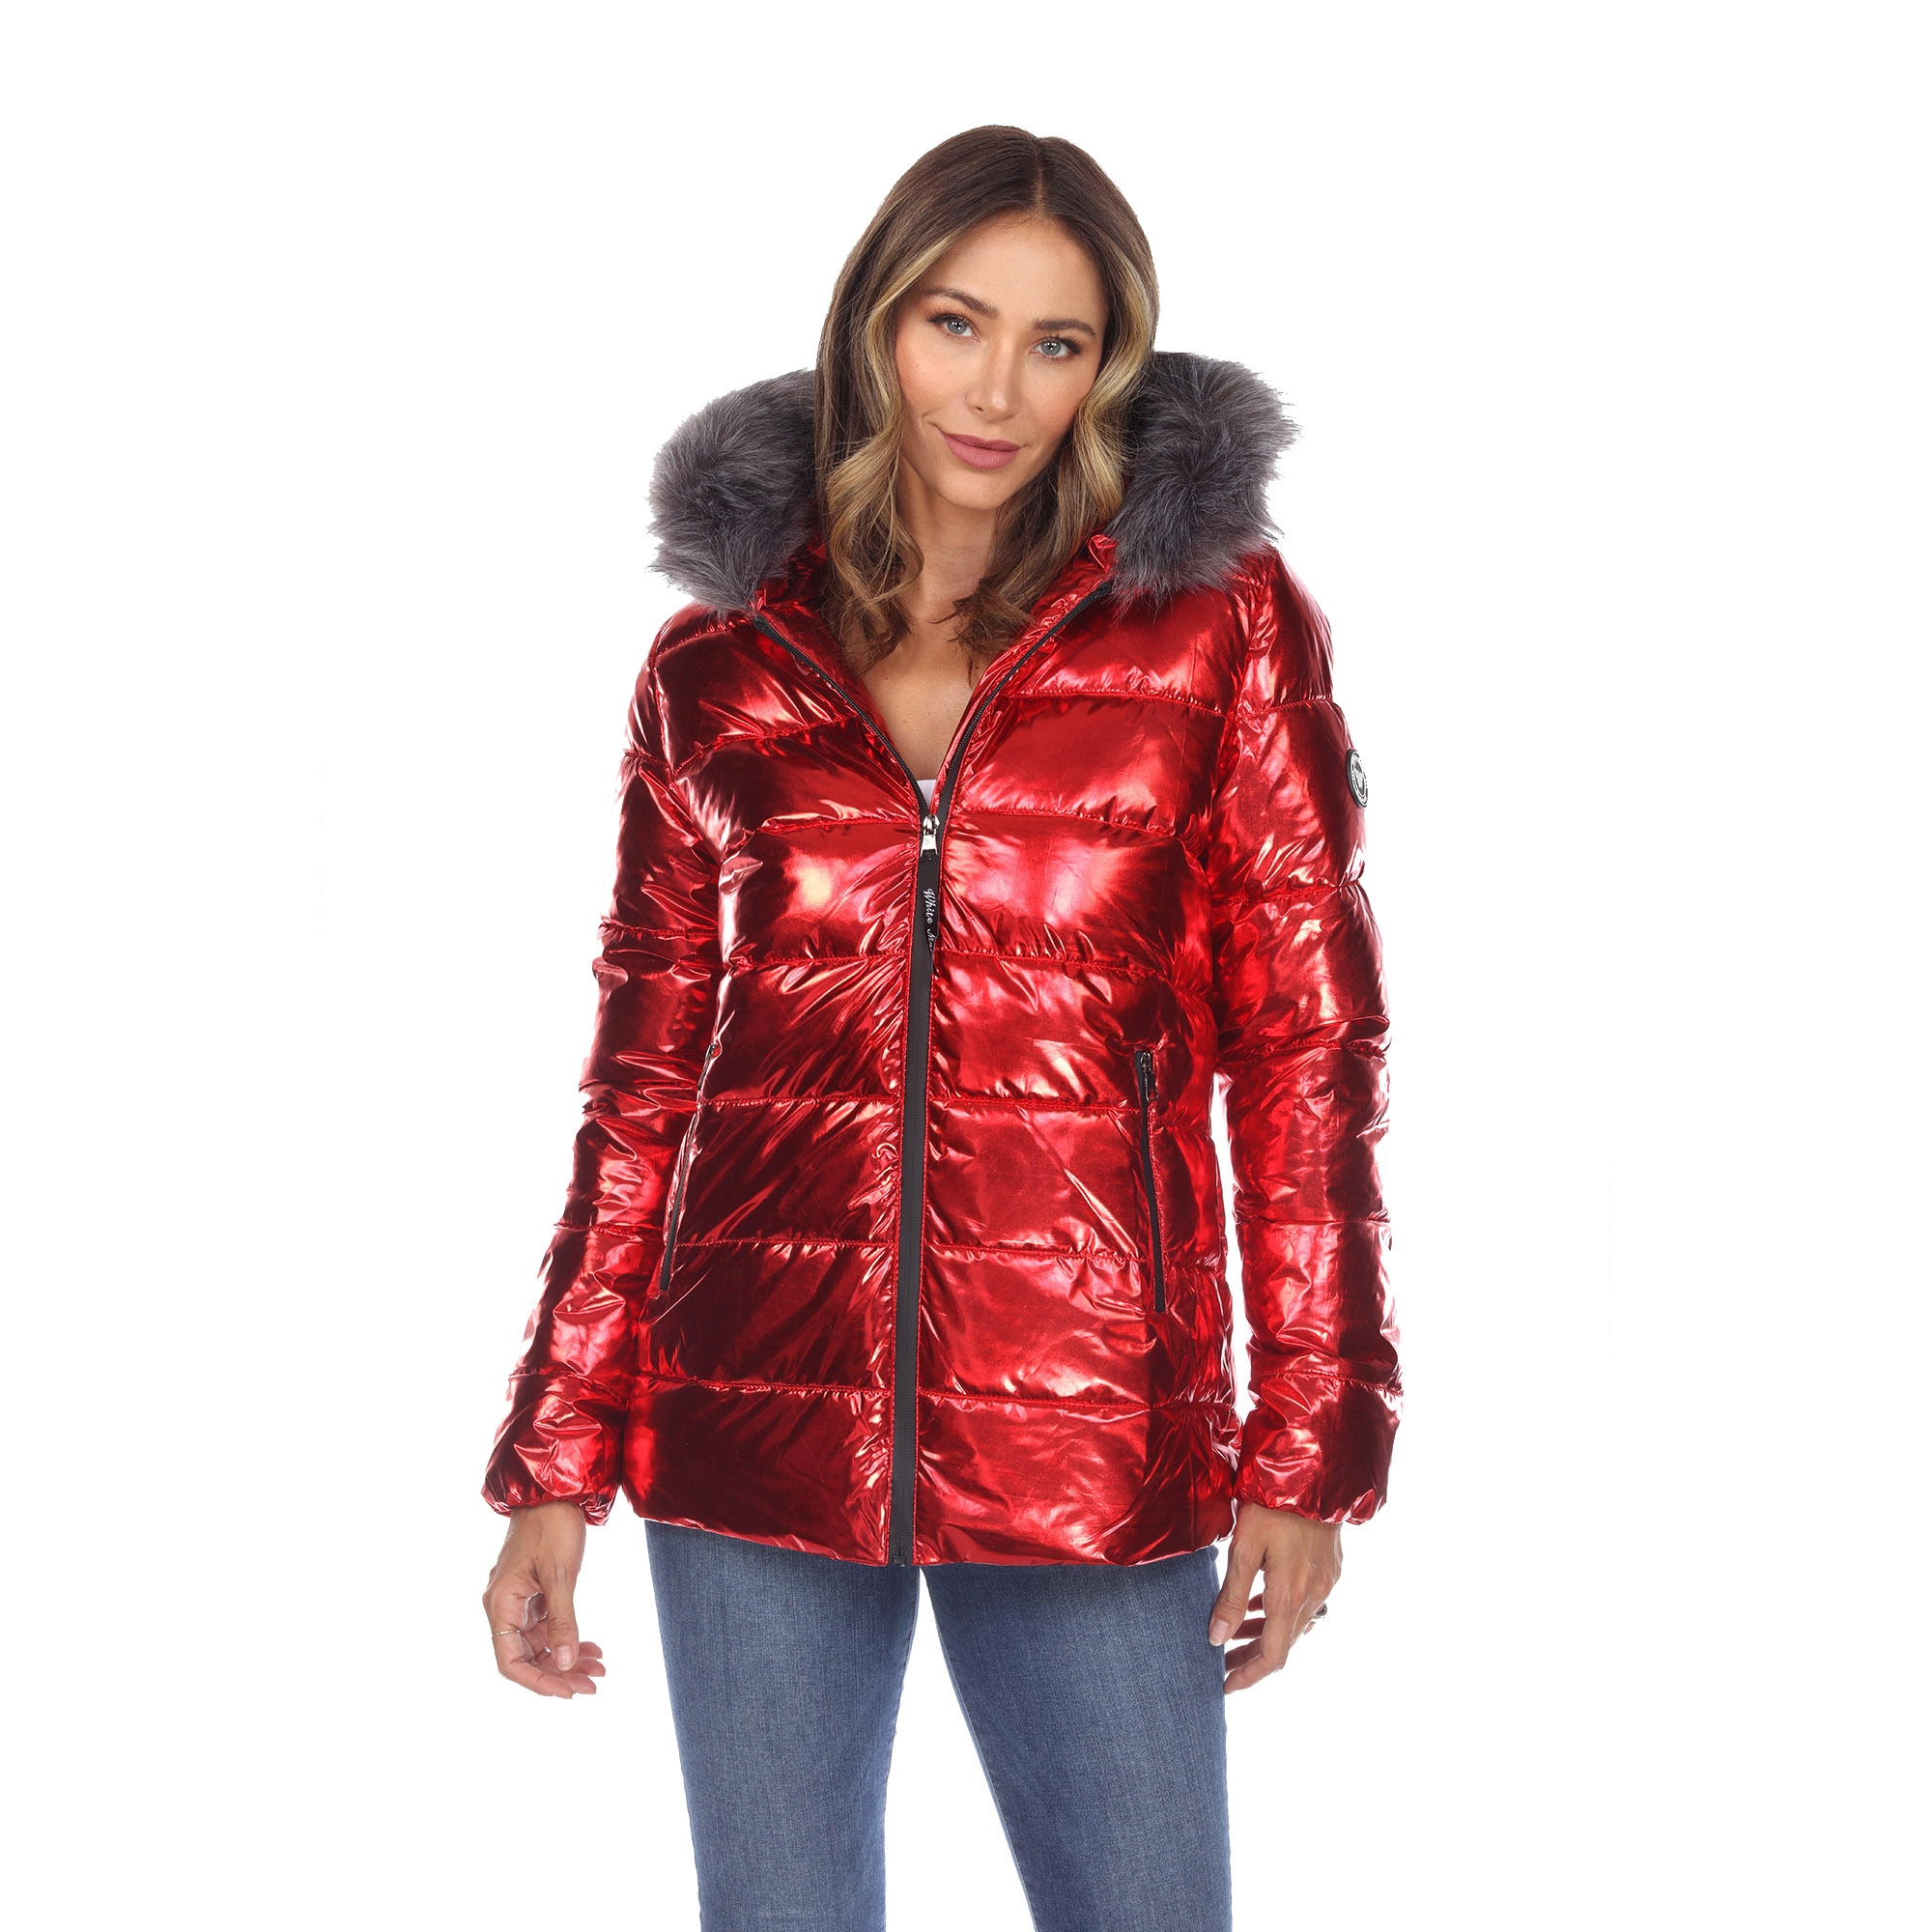 White Mark Womenâs Metallic Puffer Coat With Hoodie - Red, 2X